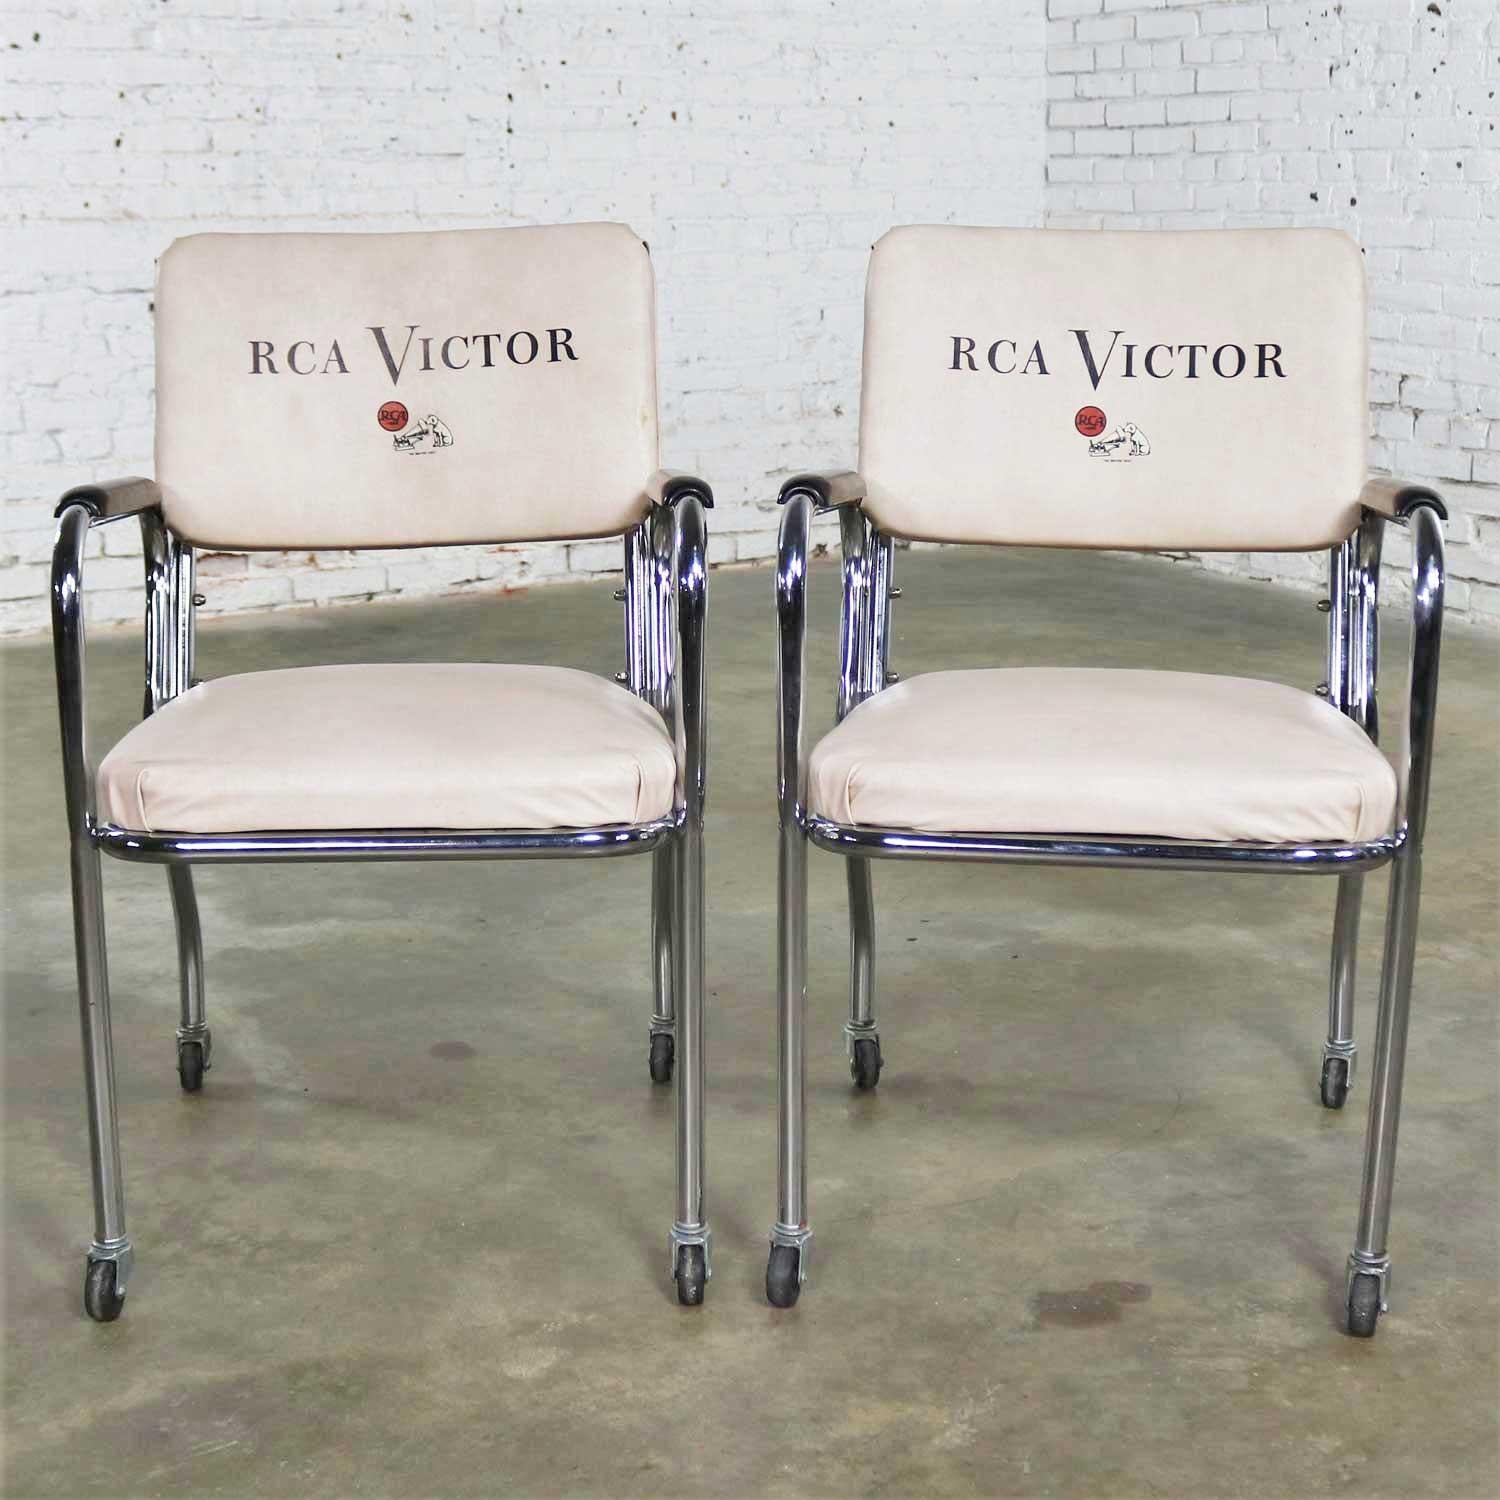 rca victor chair